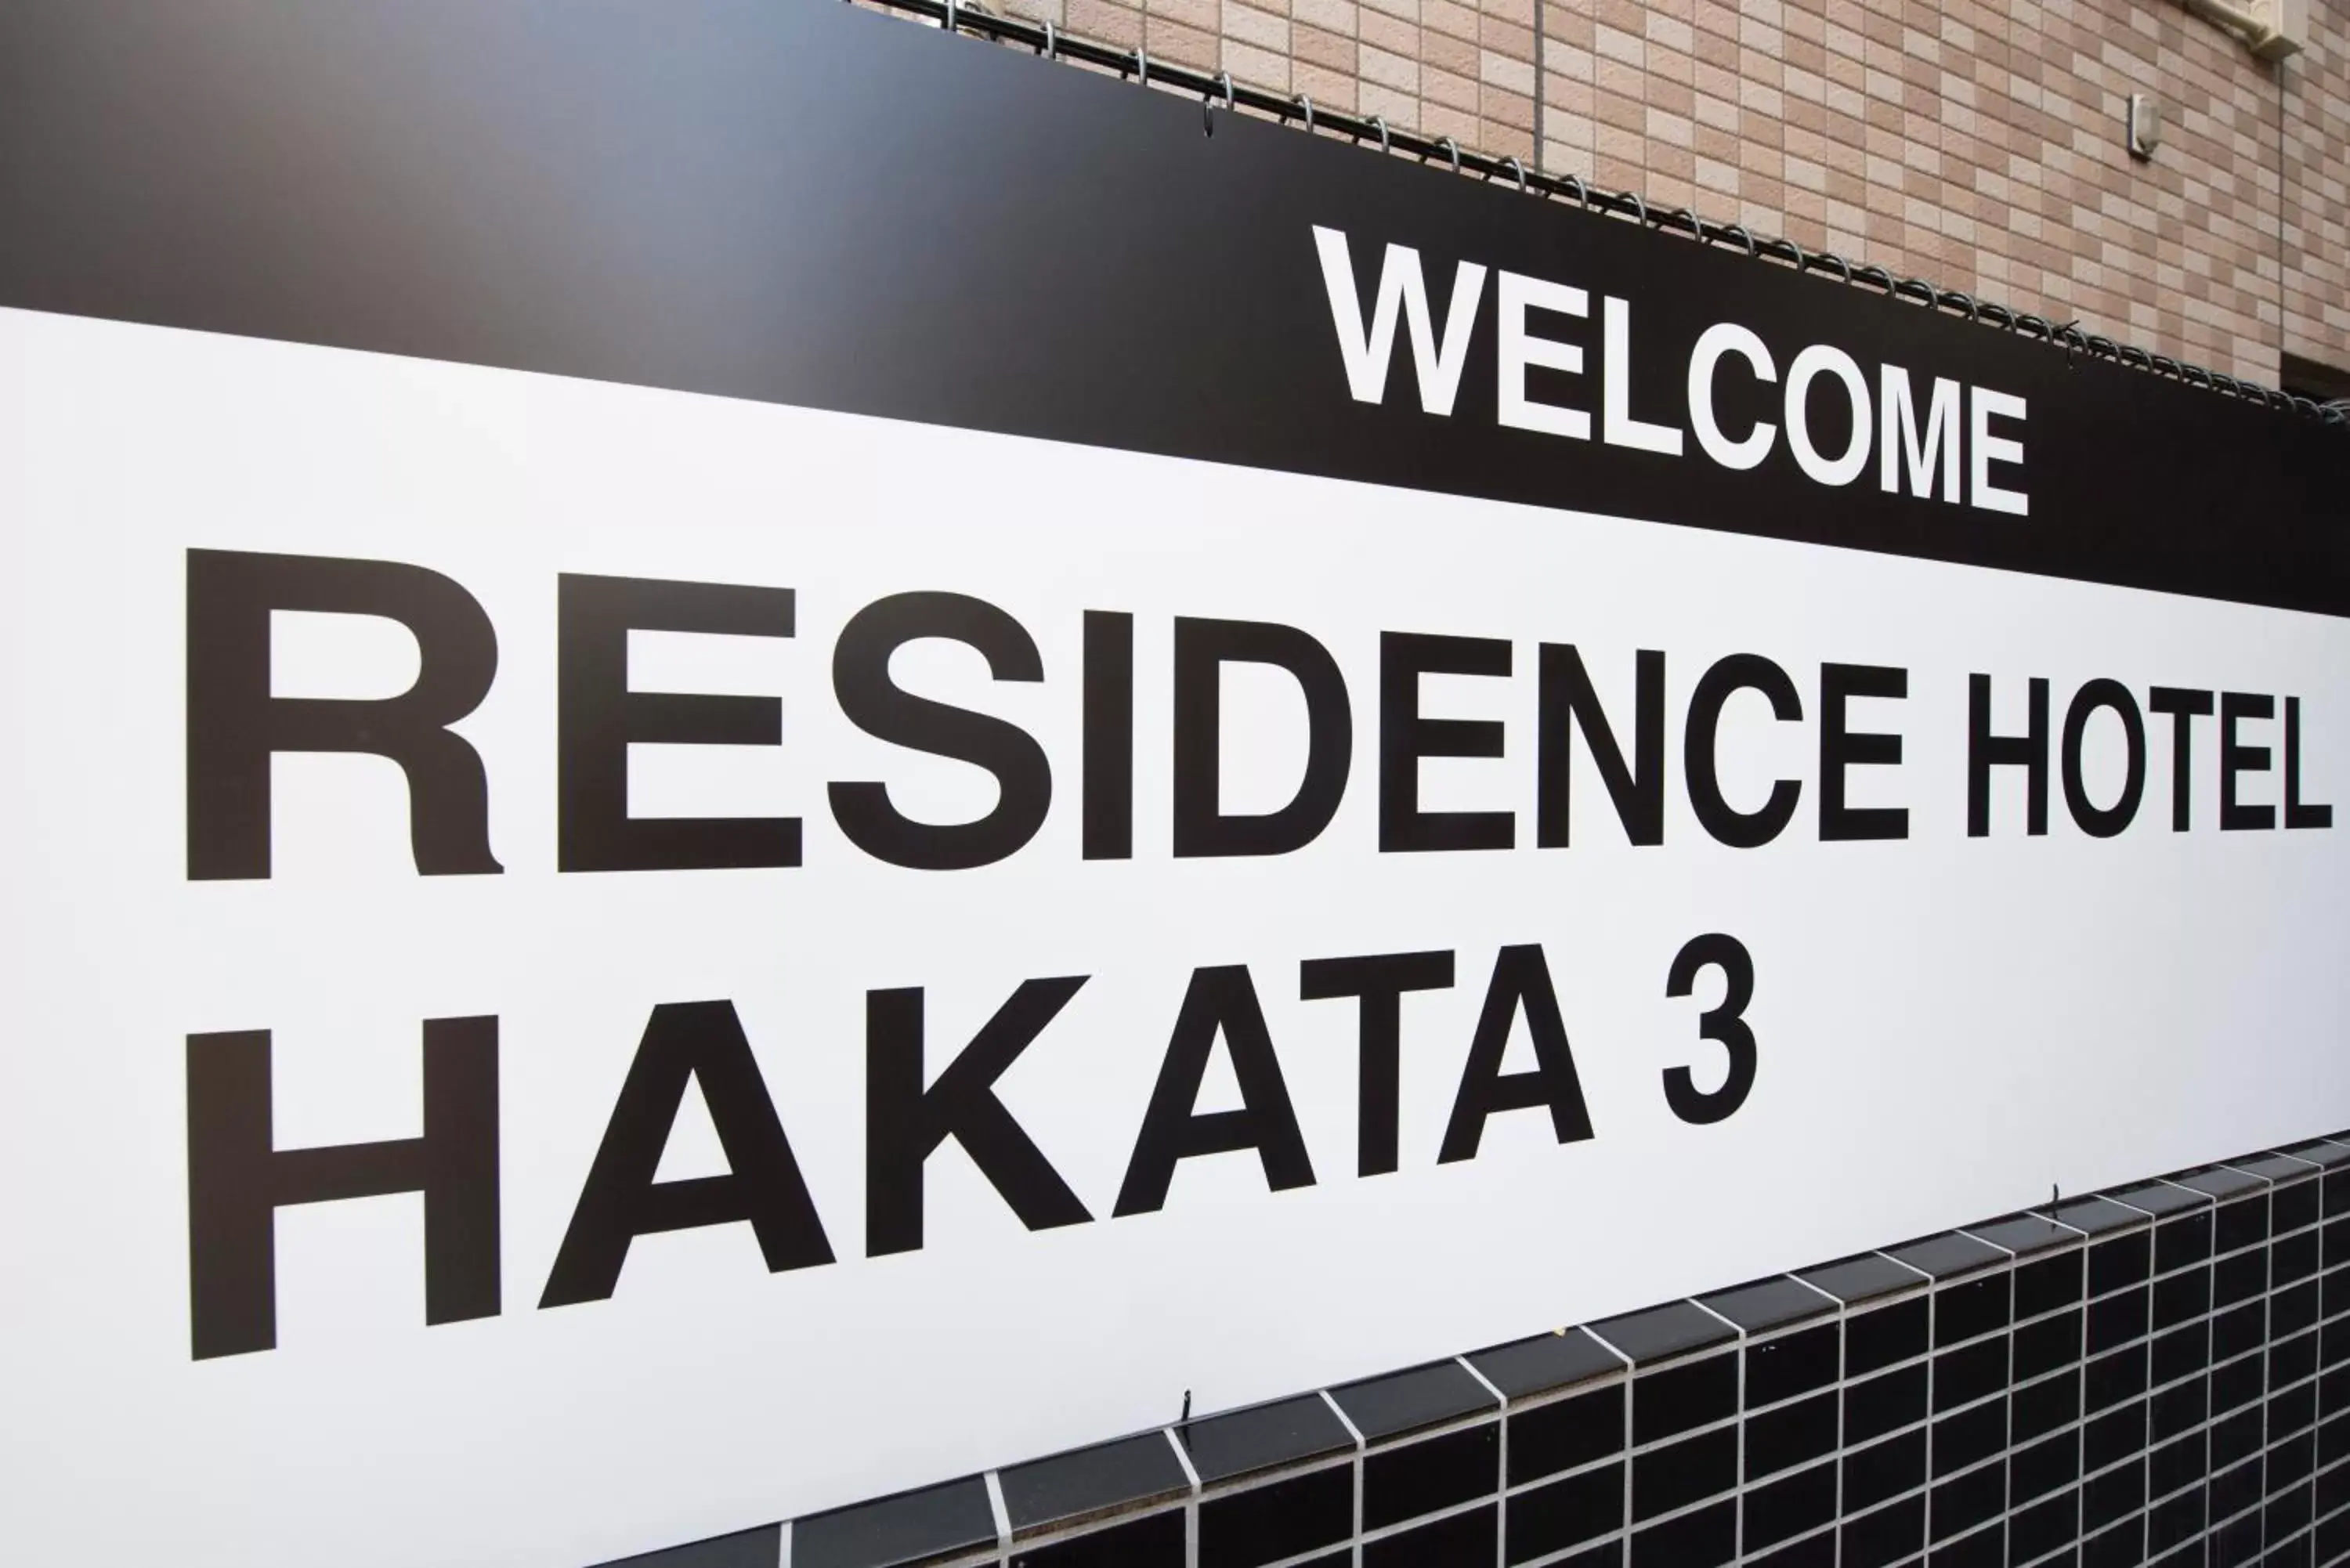 Property logo or sign in Residence Hotel Hakata 3